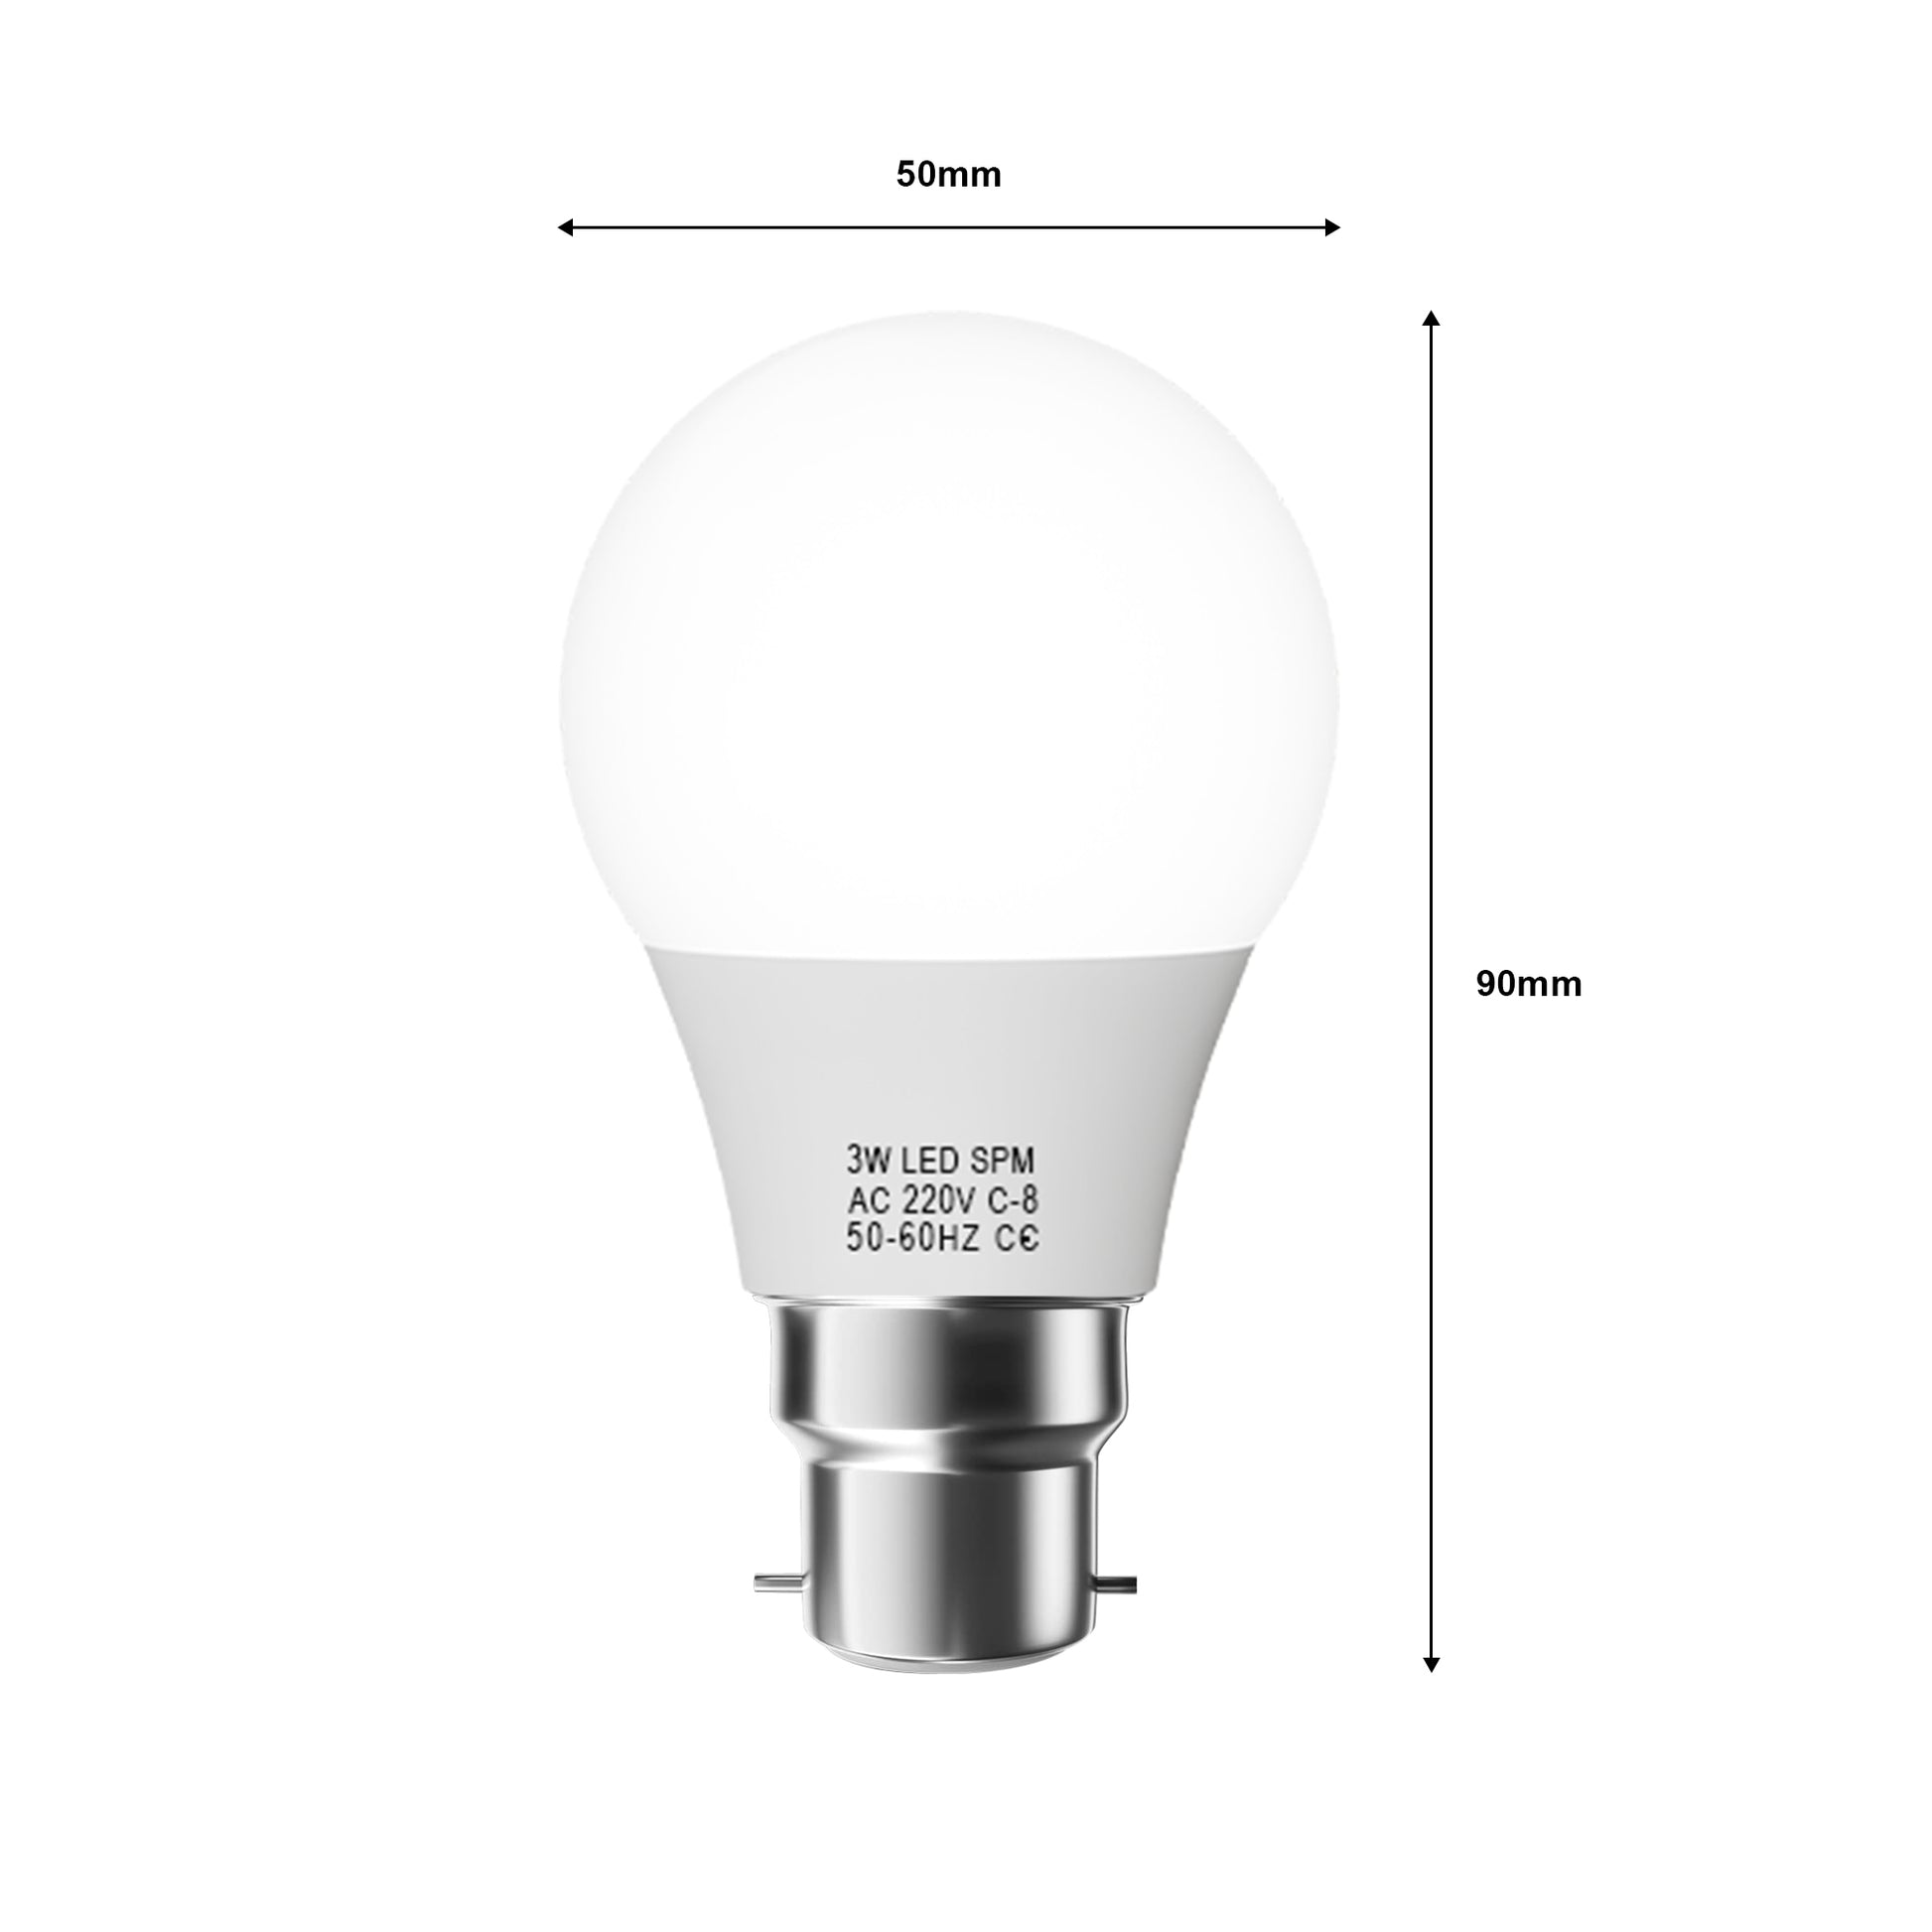 Dimmable LED light bulb